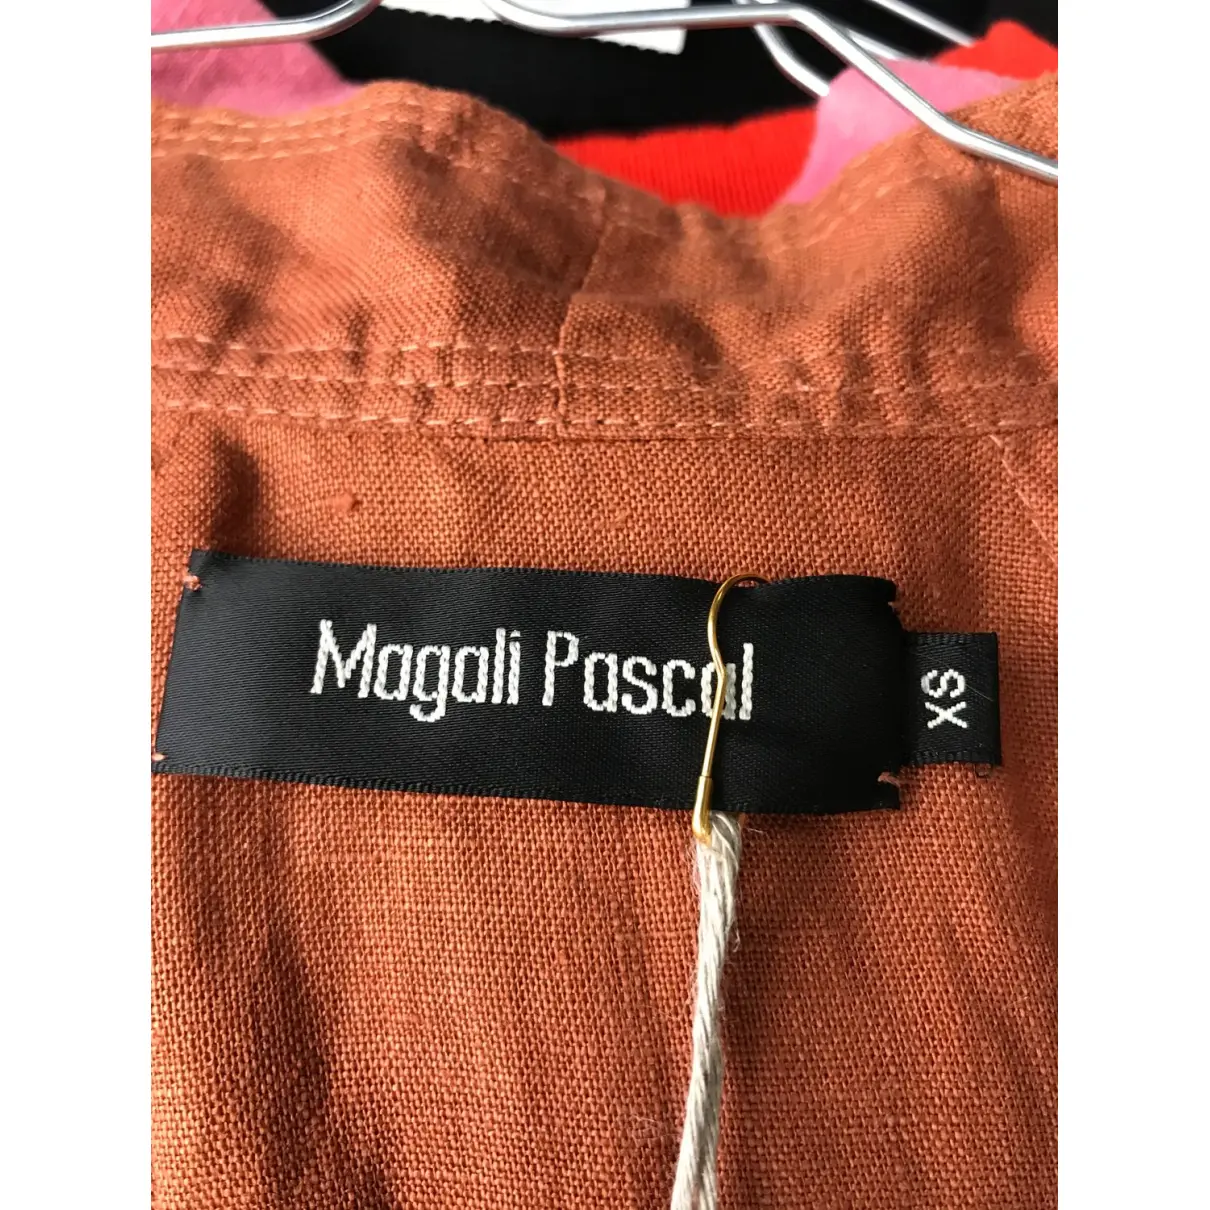 Luxury Magali Pascal Dresses Women